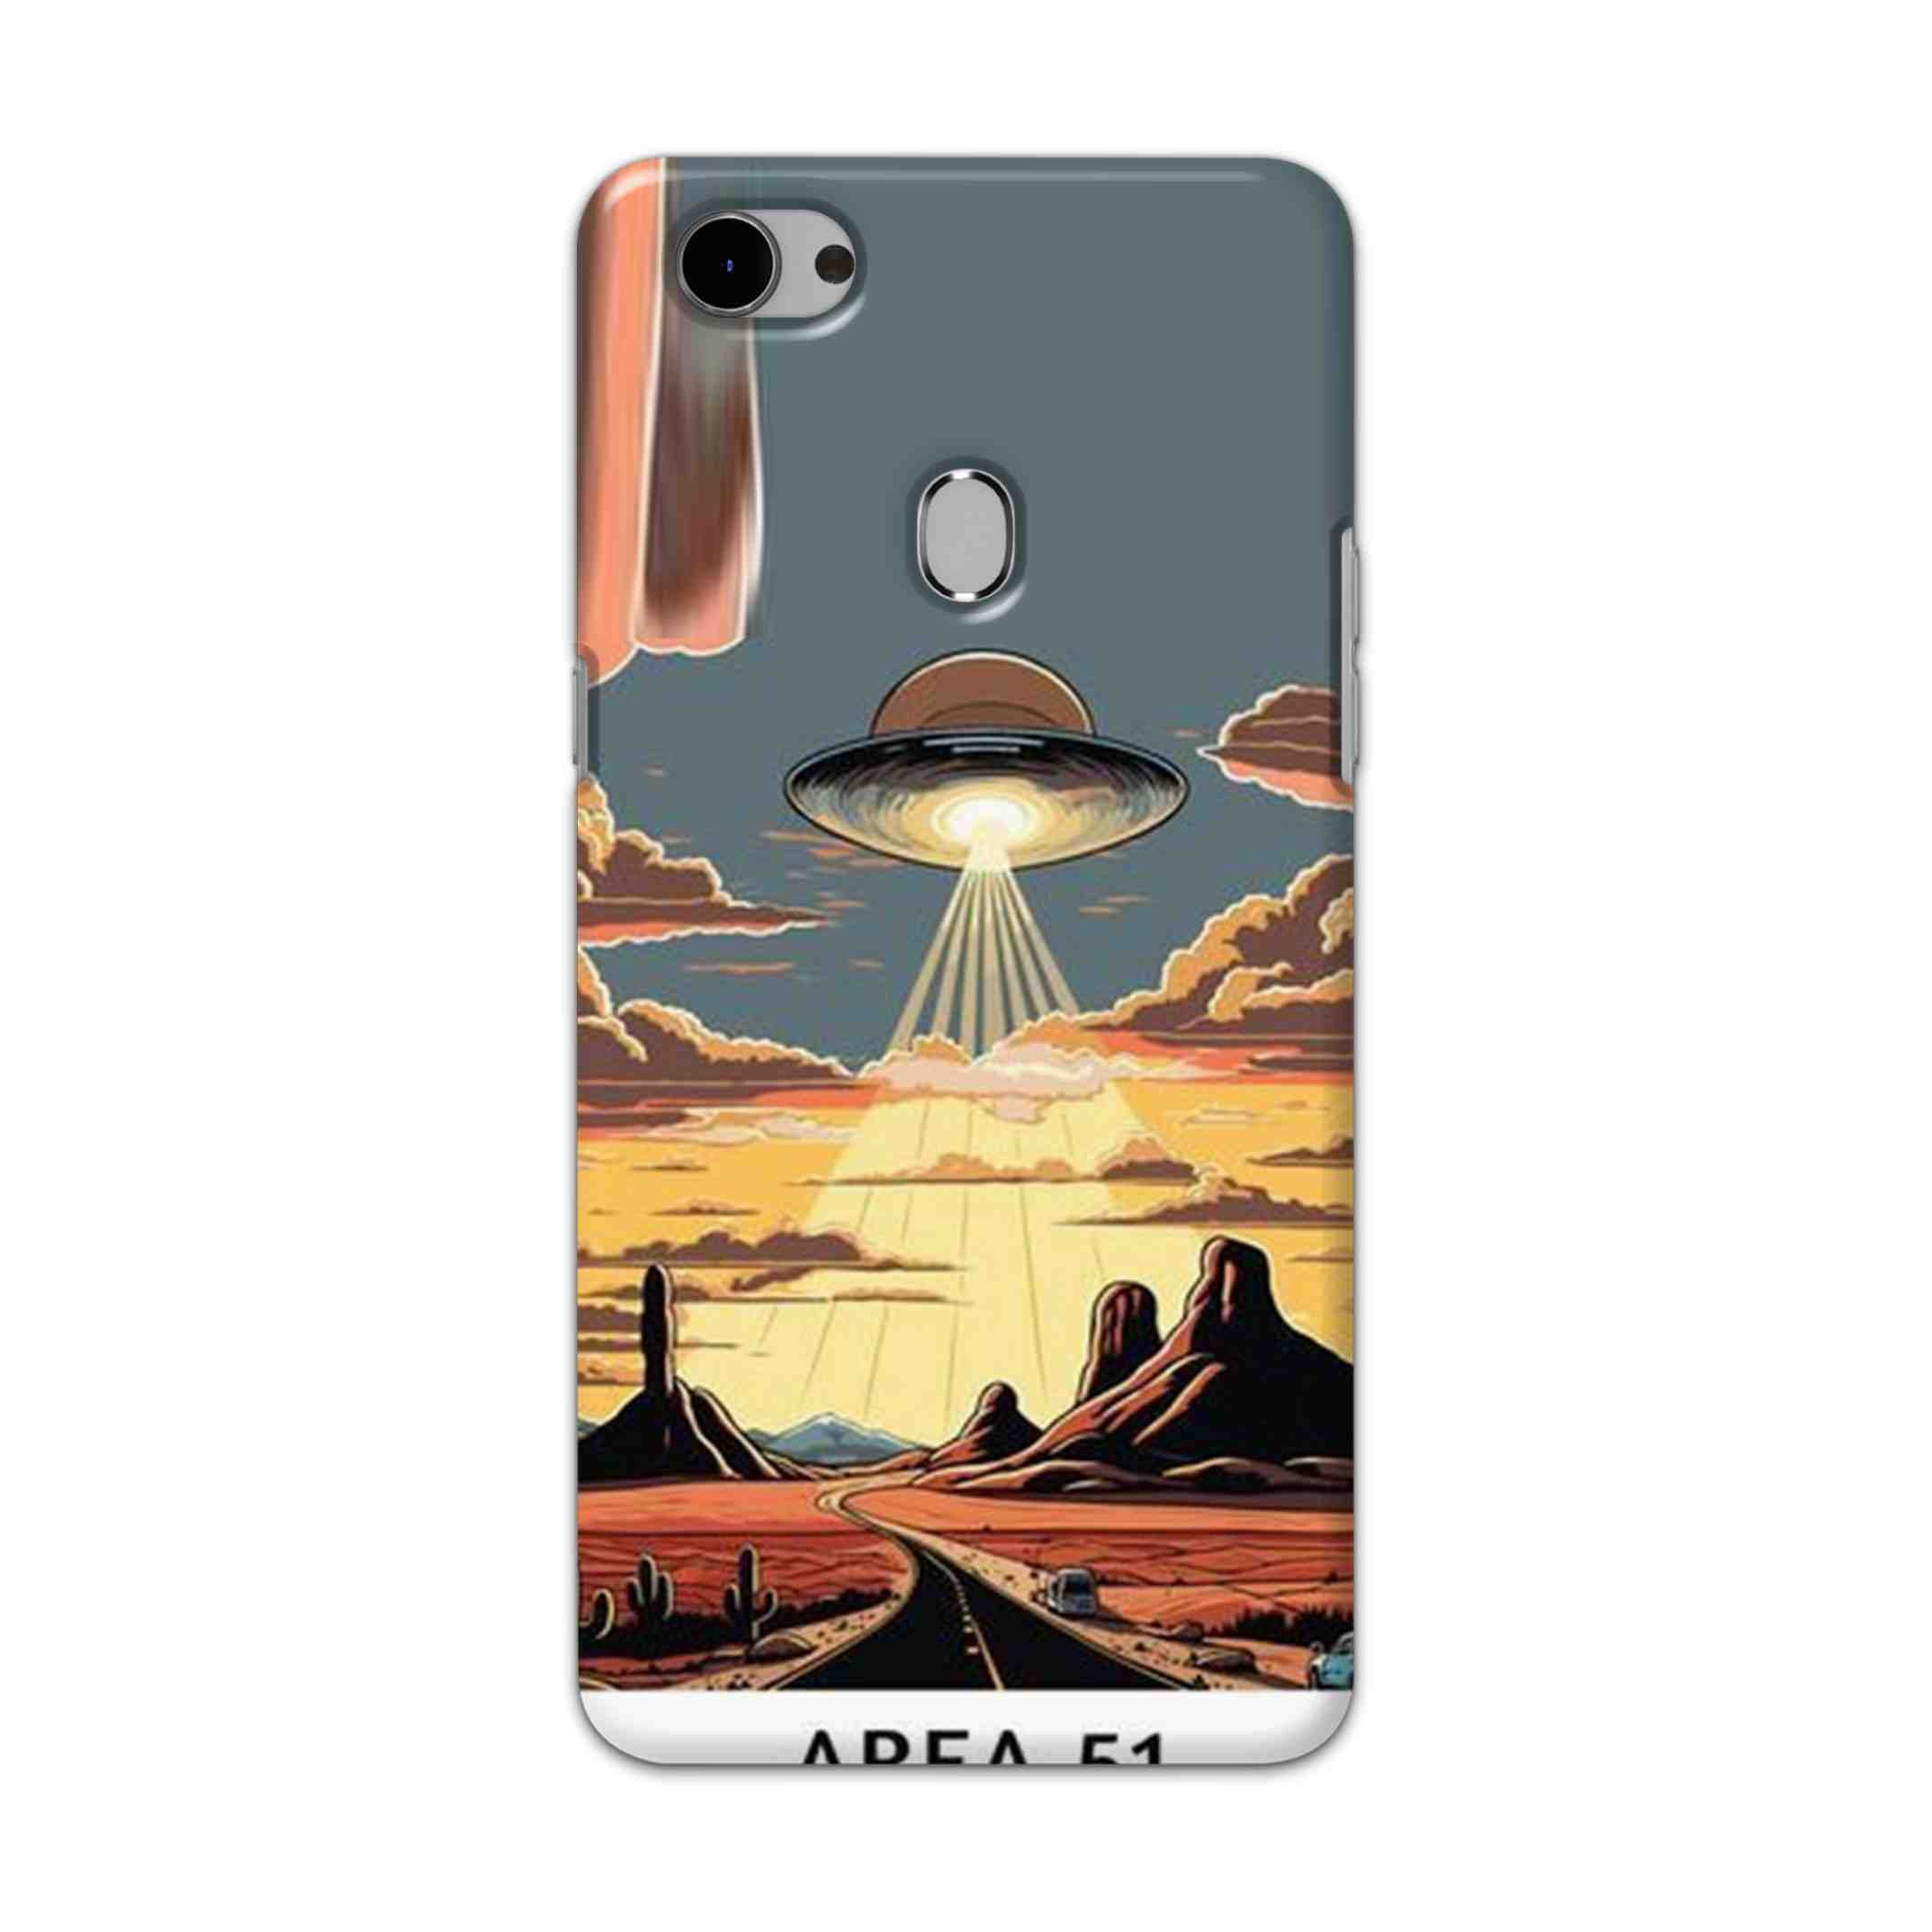 Buy Area 51 Hard Back Mobile Phone Case Cover For Oppo F7 Online